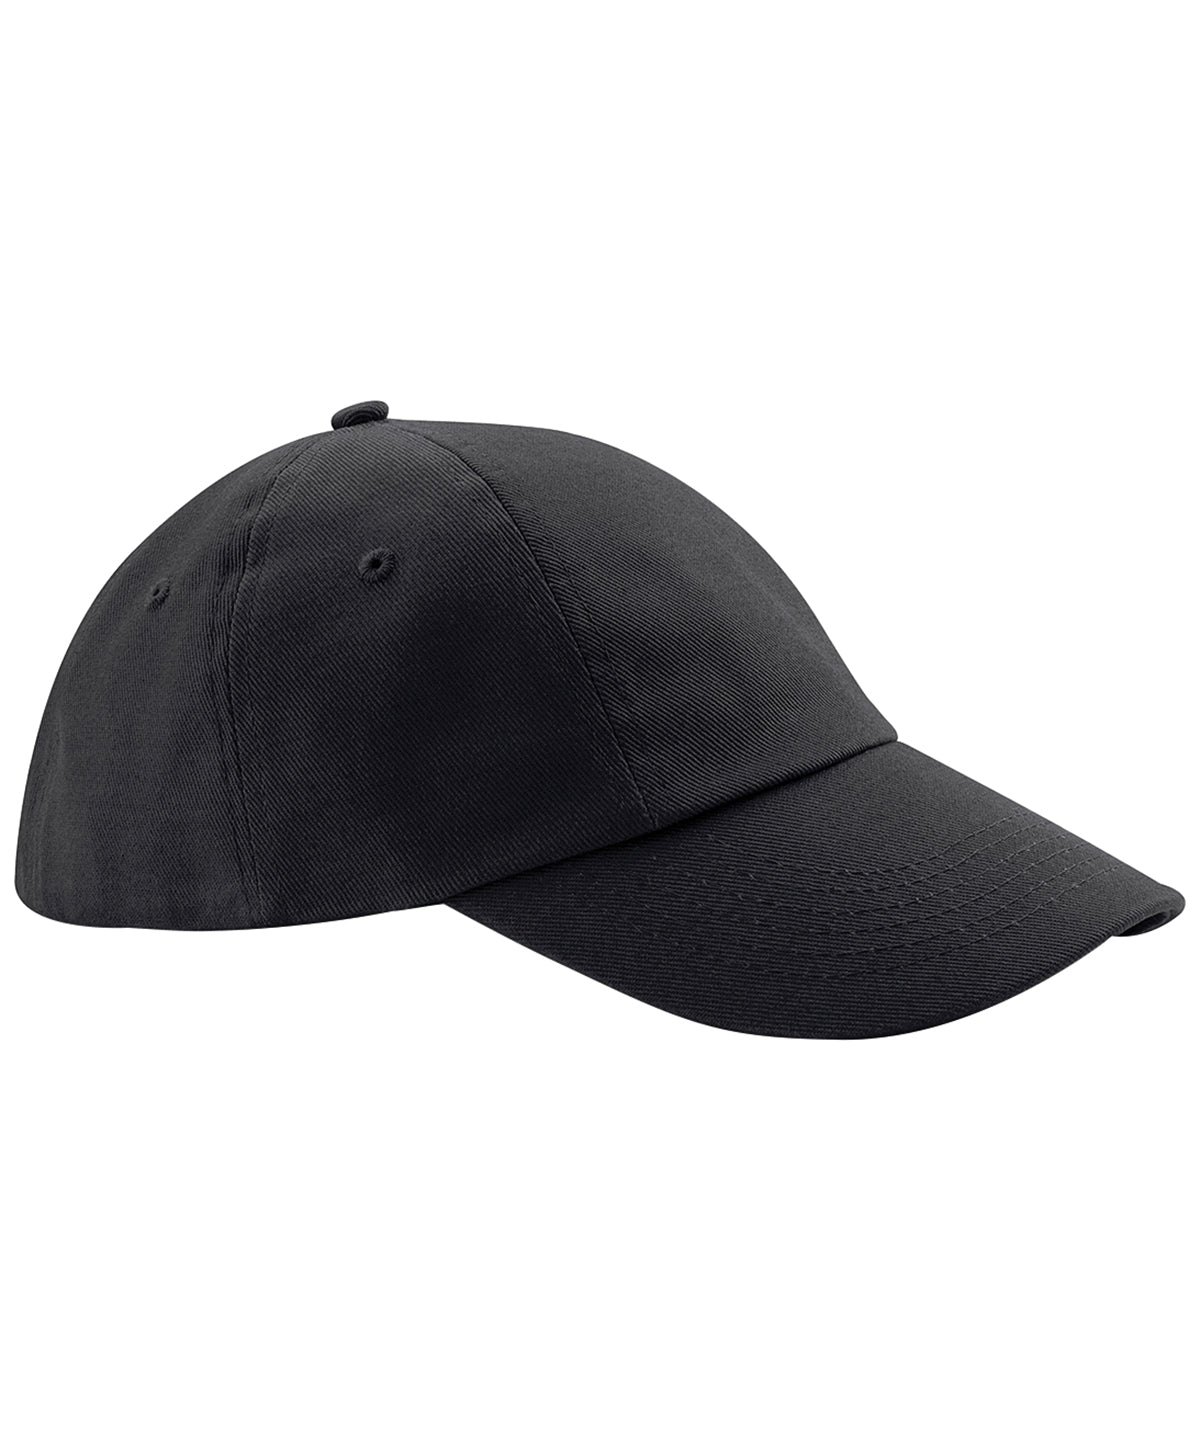 Personalised Caps - Black Beechfield Low-profile heavy cotton drill cap